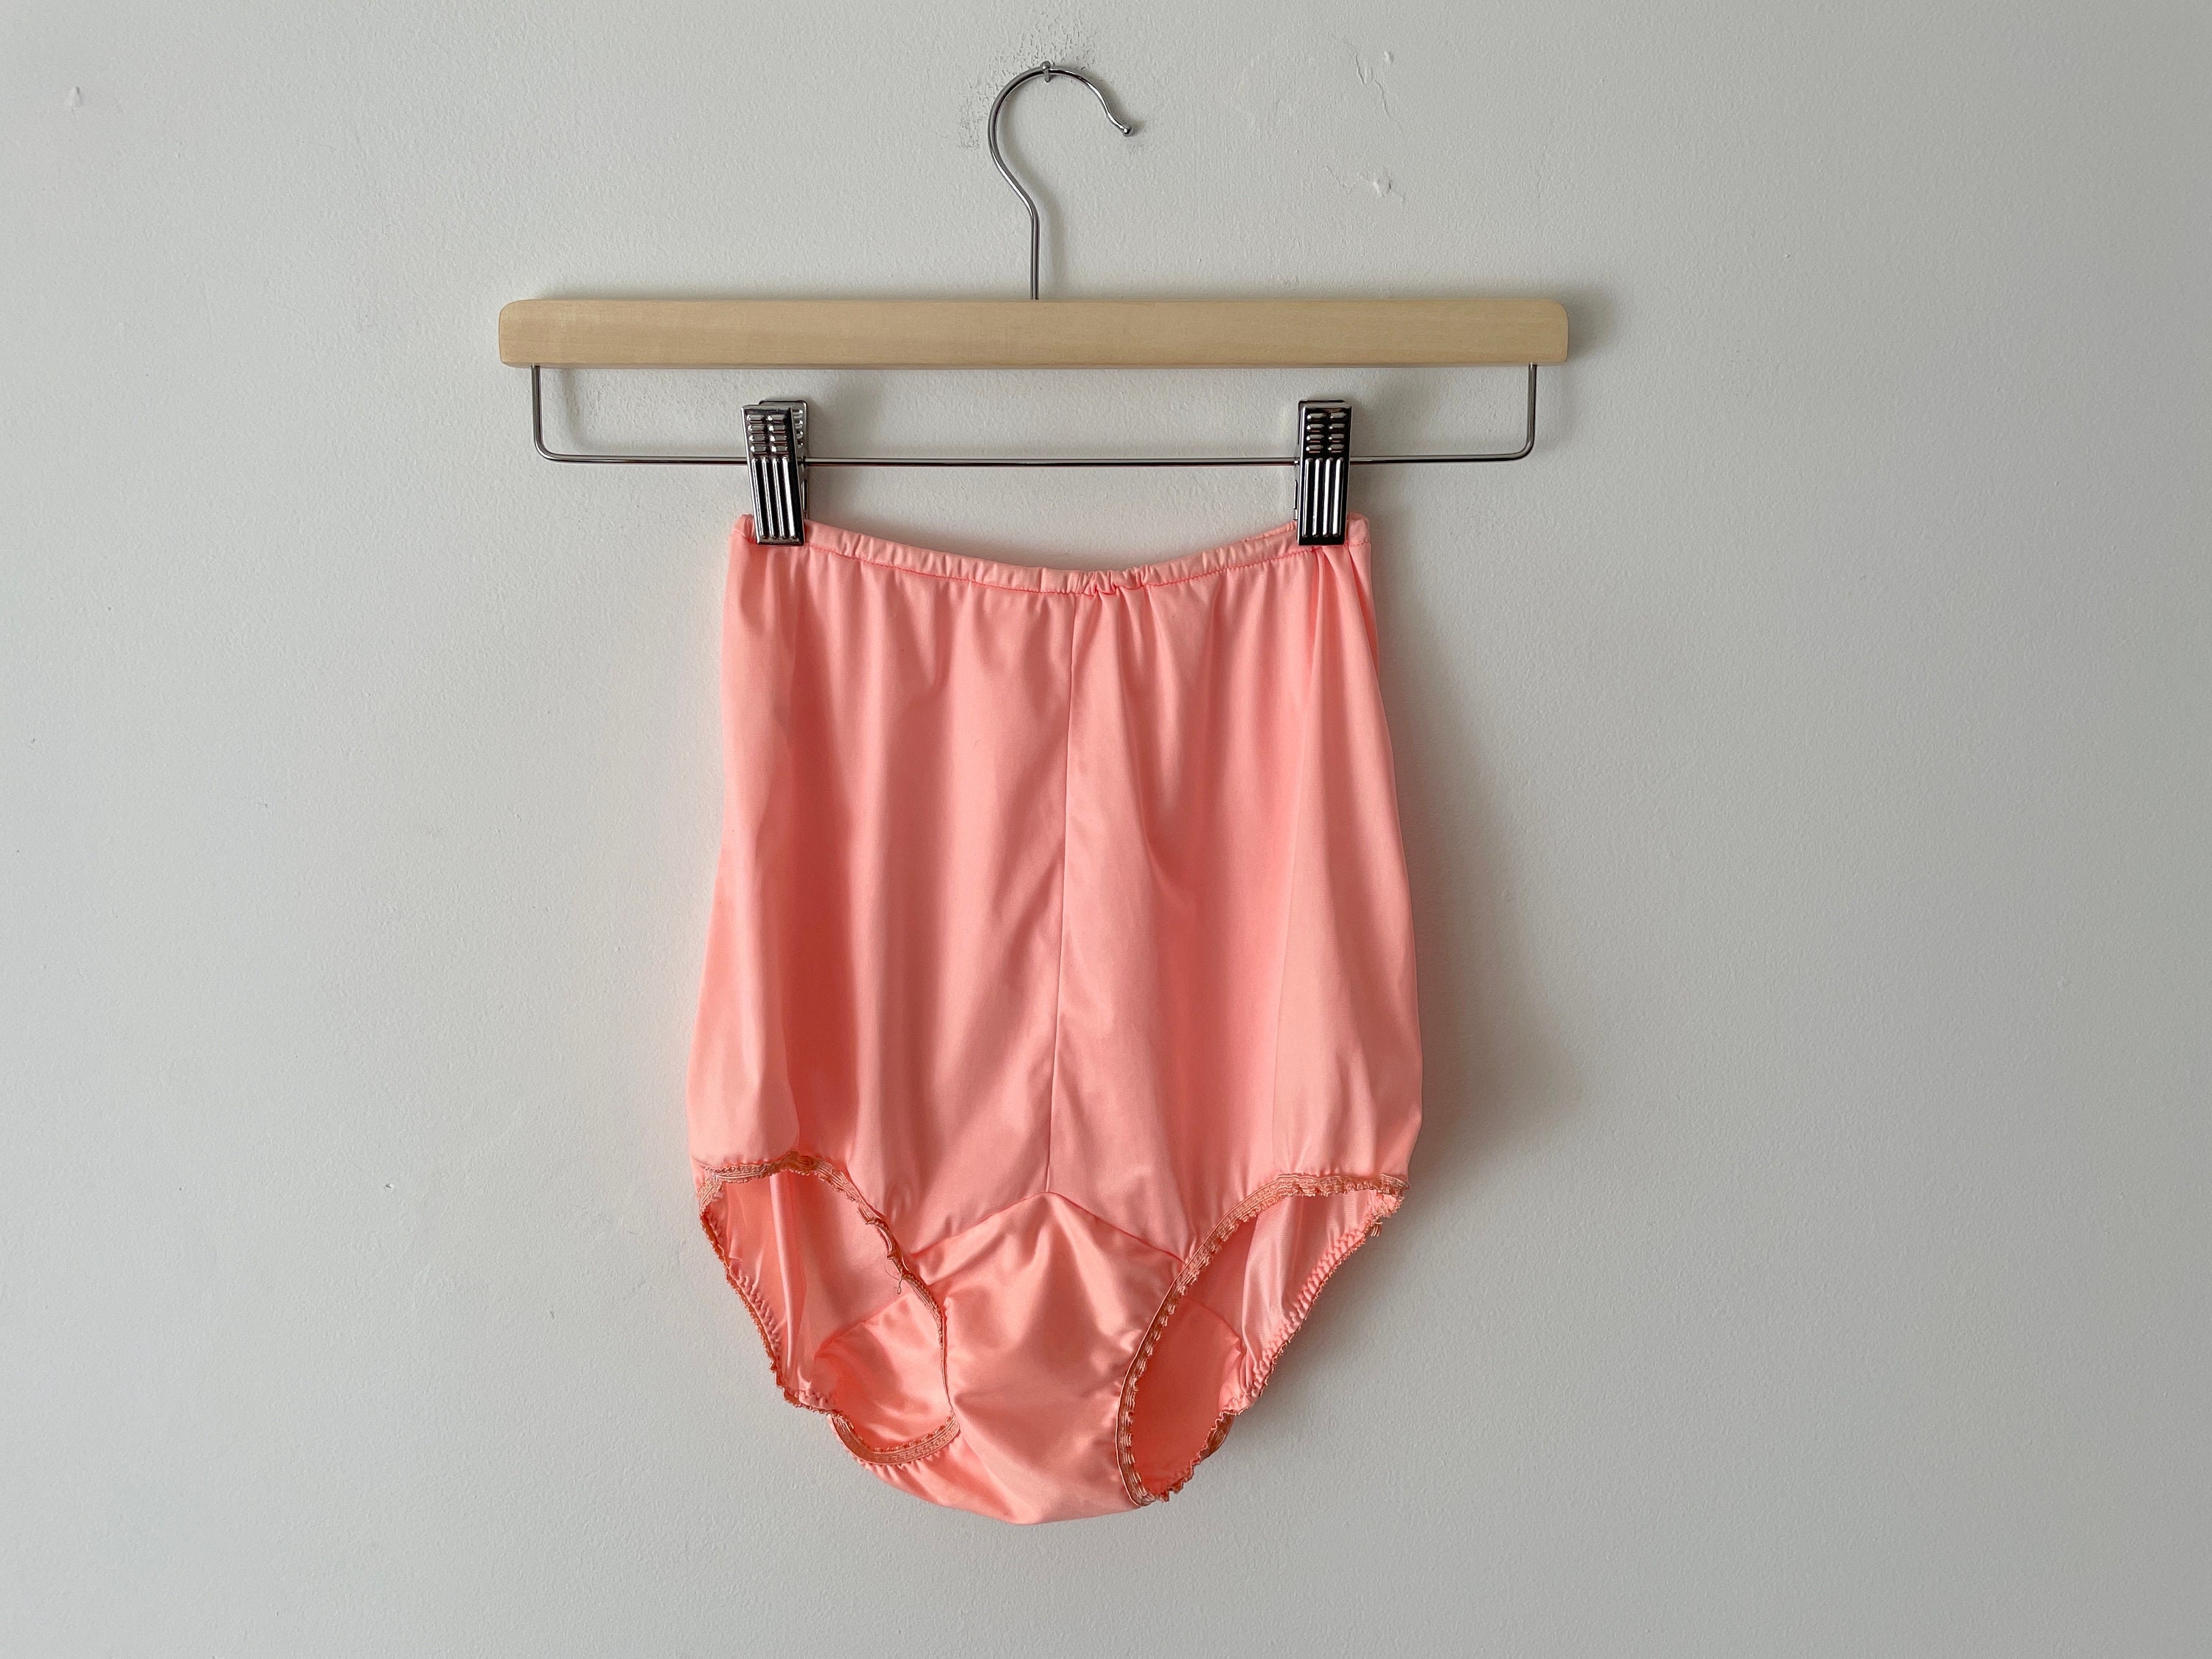 Vintage Retro Pink Panties Briefs Underwear Lingerie Large 1960s 70s Mod  Undergarments Cou-batten Acetate Intimate Boudoir Gift Collectible -   Norway